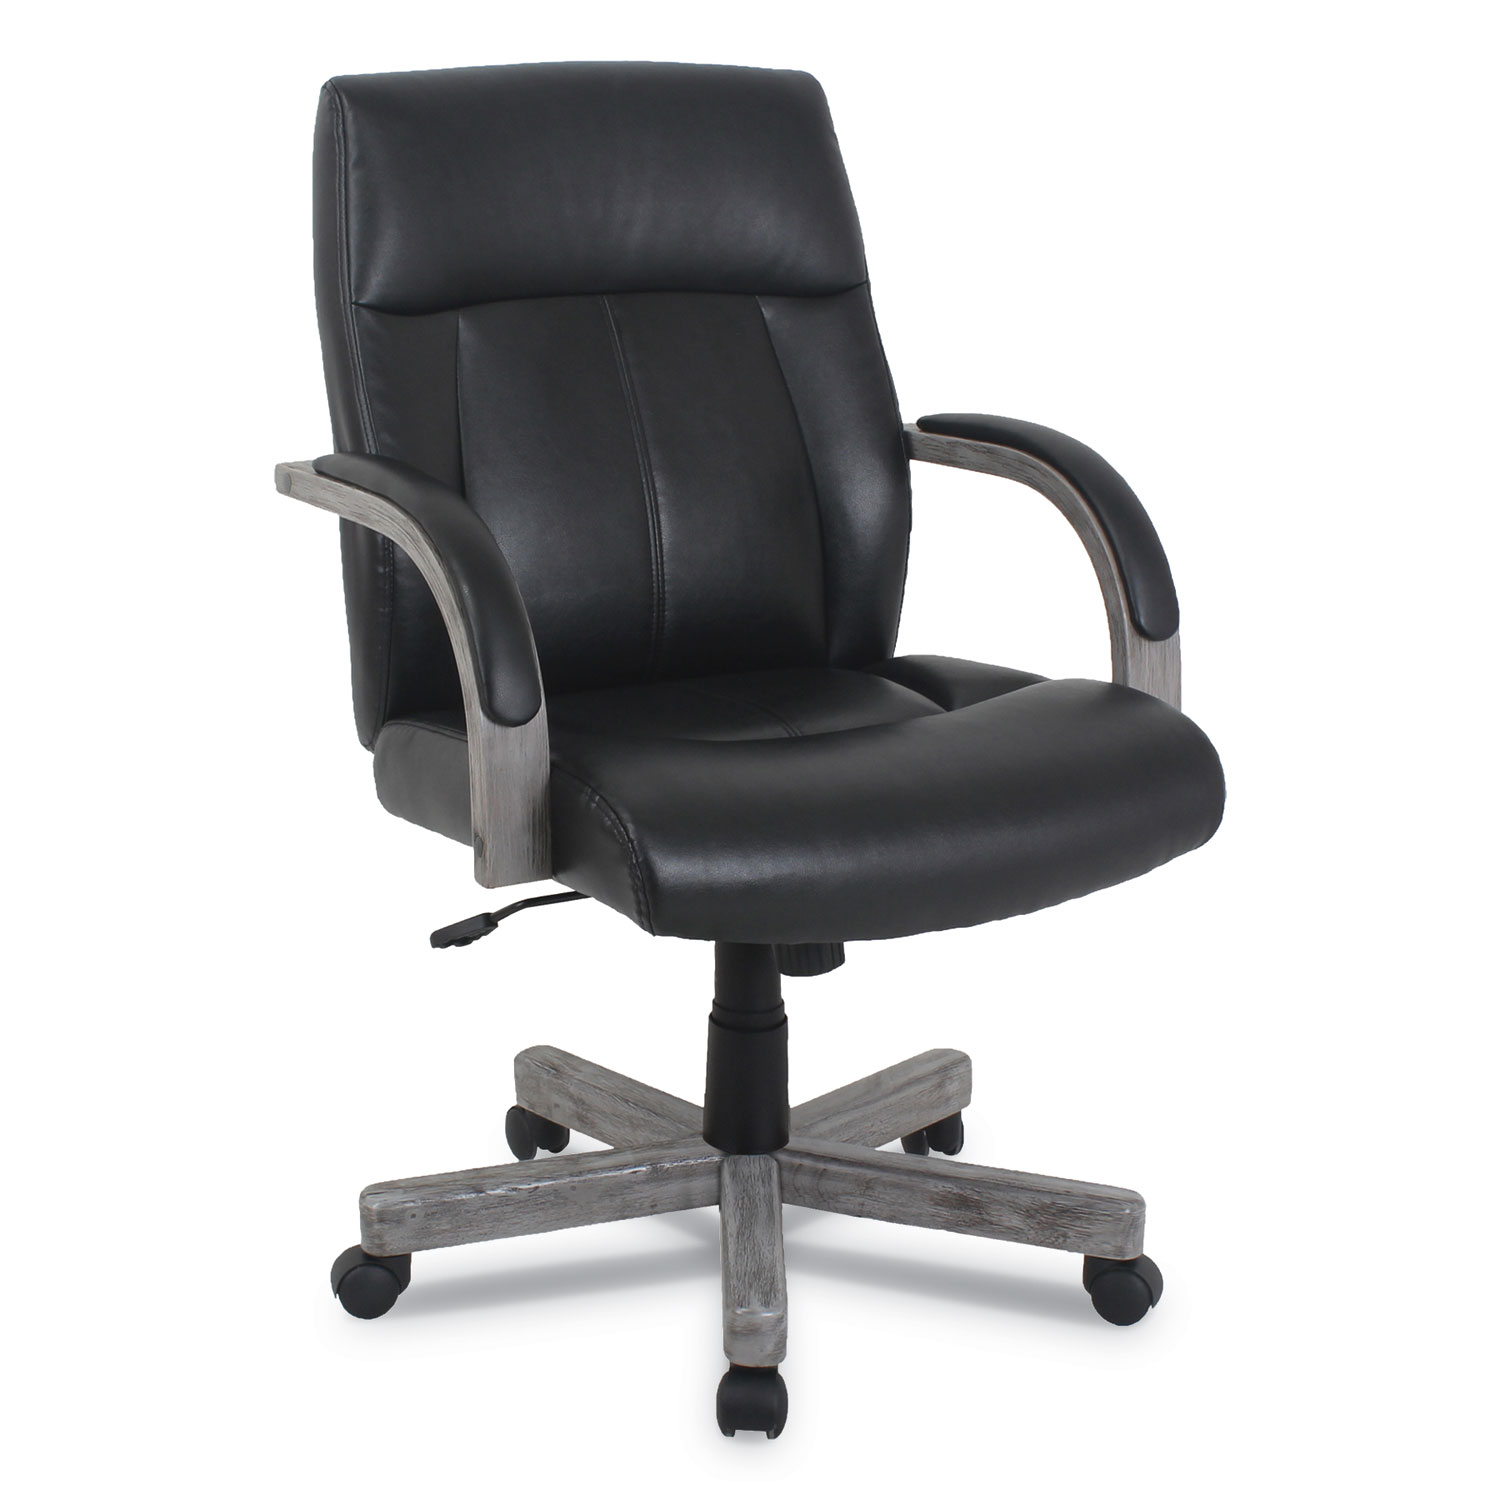  kathy ireland OFFICE by Alera KA641GB kathy ireland OFFICE by Alera Dorian Series Wood-Trim Leather Office Chair, Black Seat/Back, Gray Base (ALEKA641GB) 